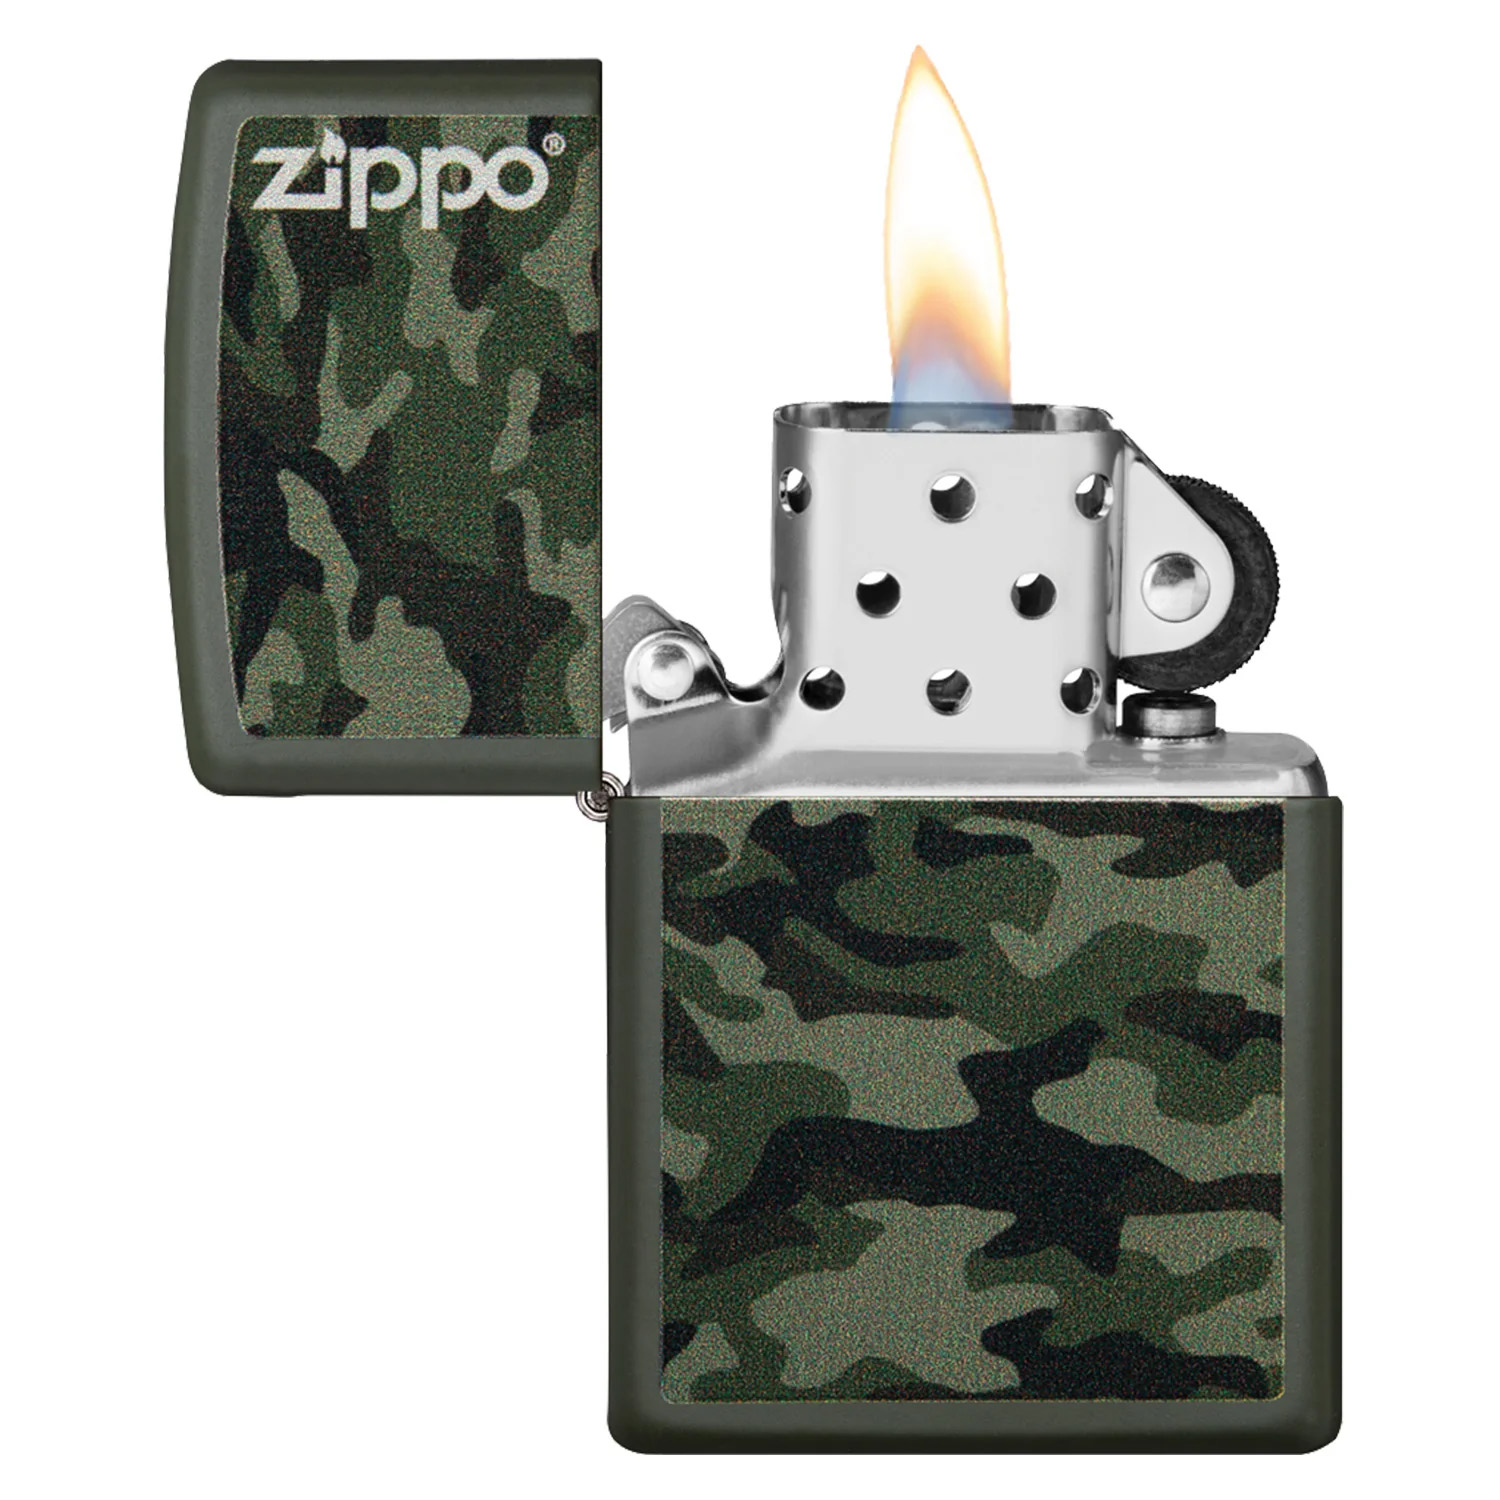 Zippo Camo and Zippo Design 2